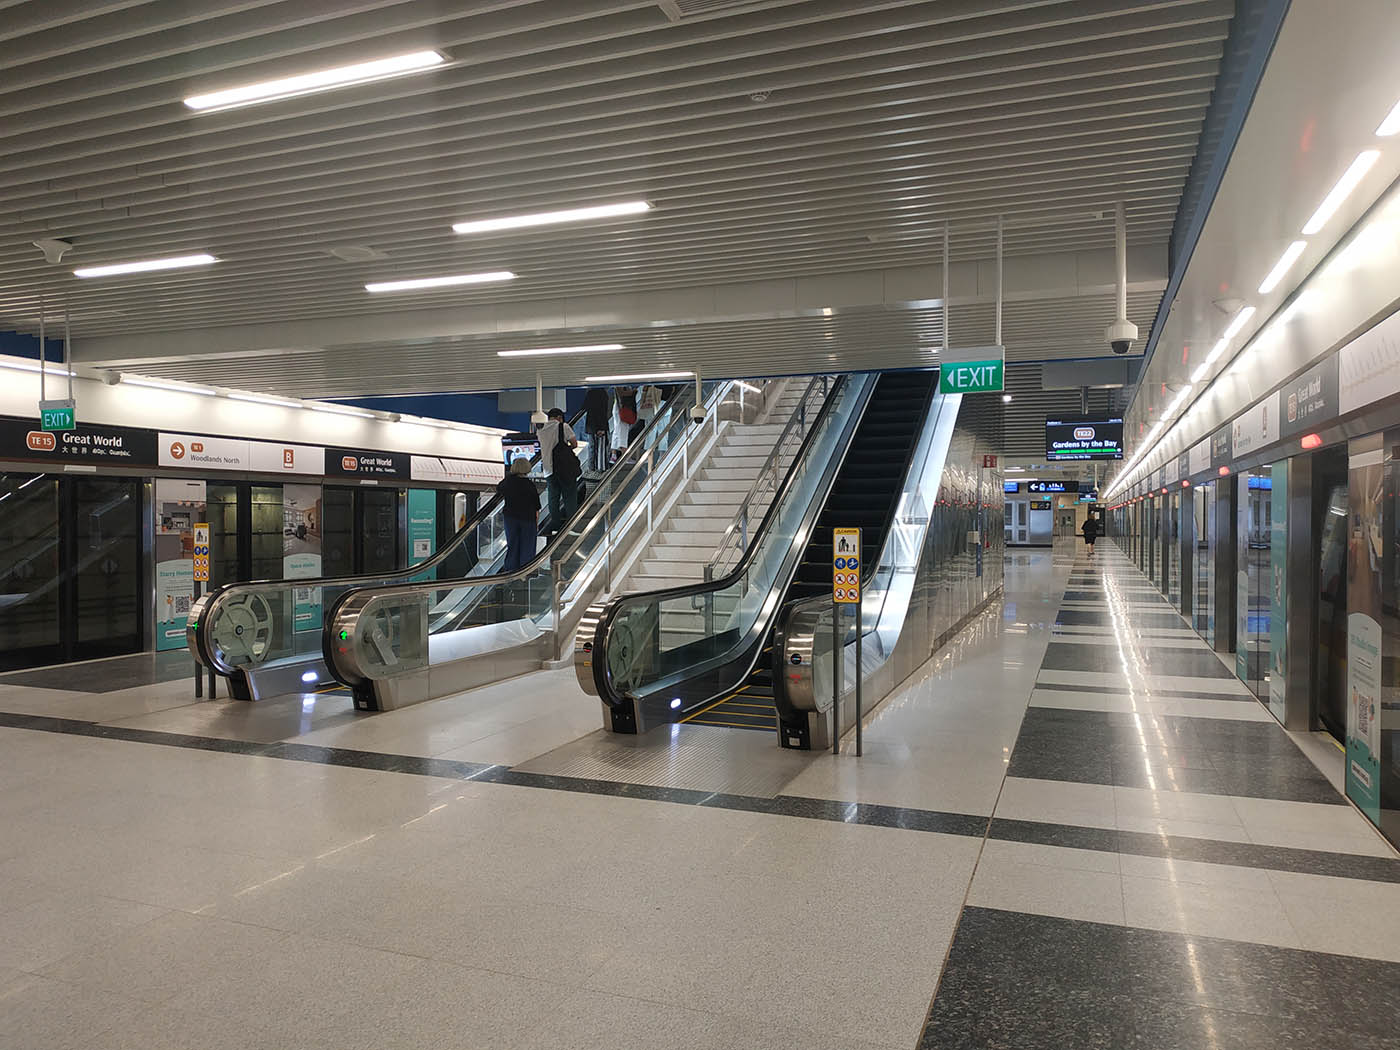 Great World MRT Station - - TE15 Platforms